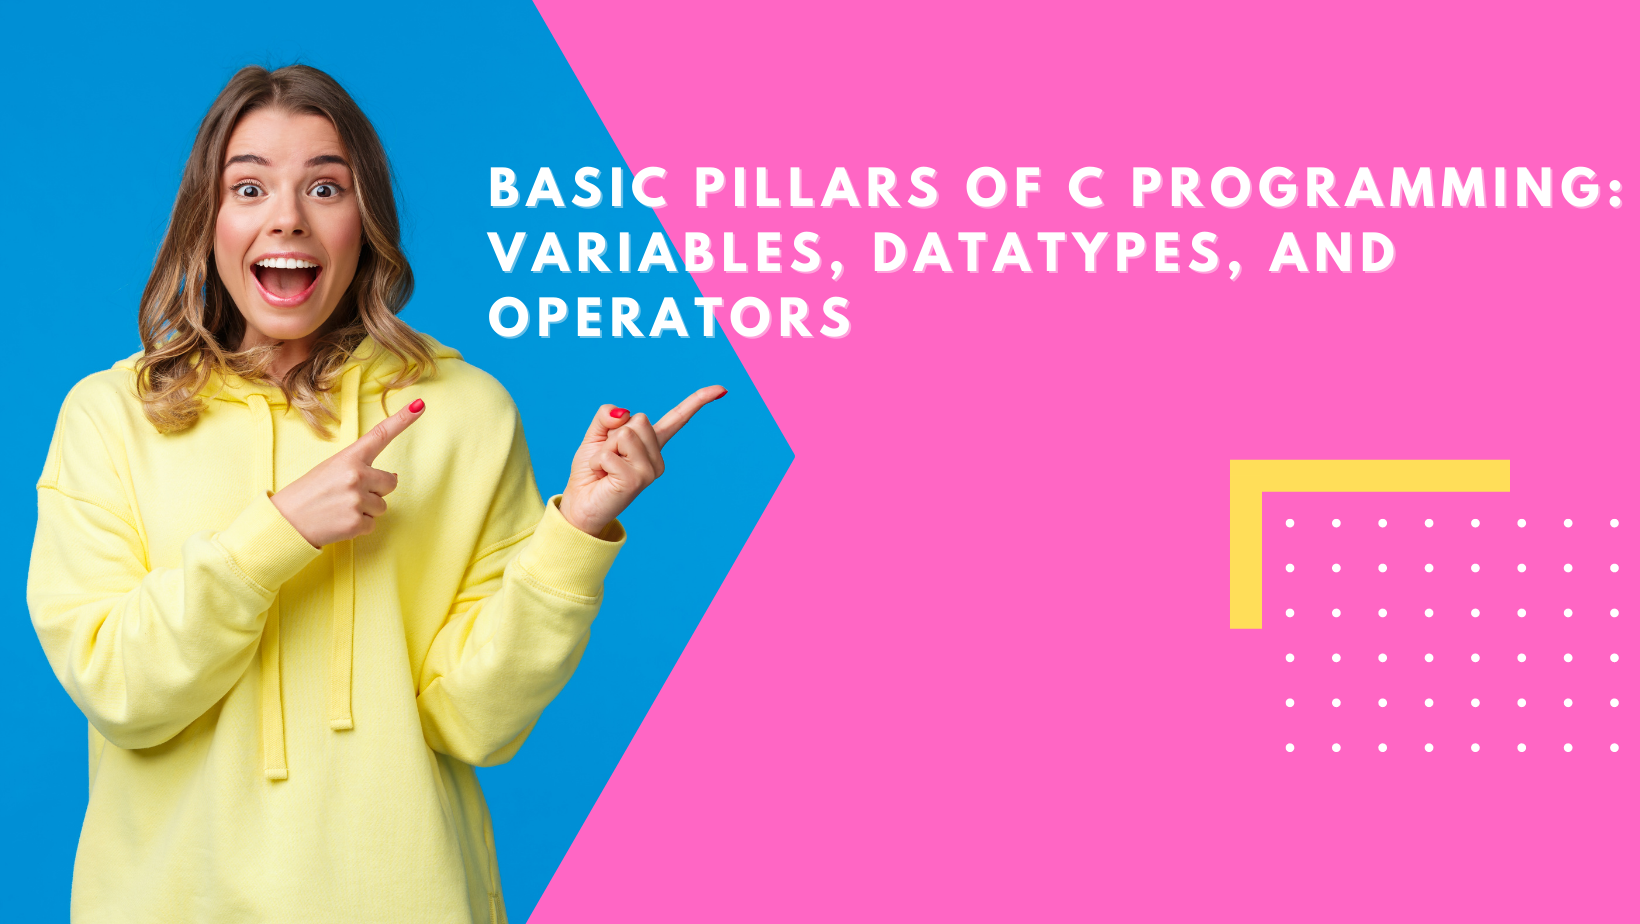 Basic Pillars of C Programming: Variables, Datatypes, and Operators